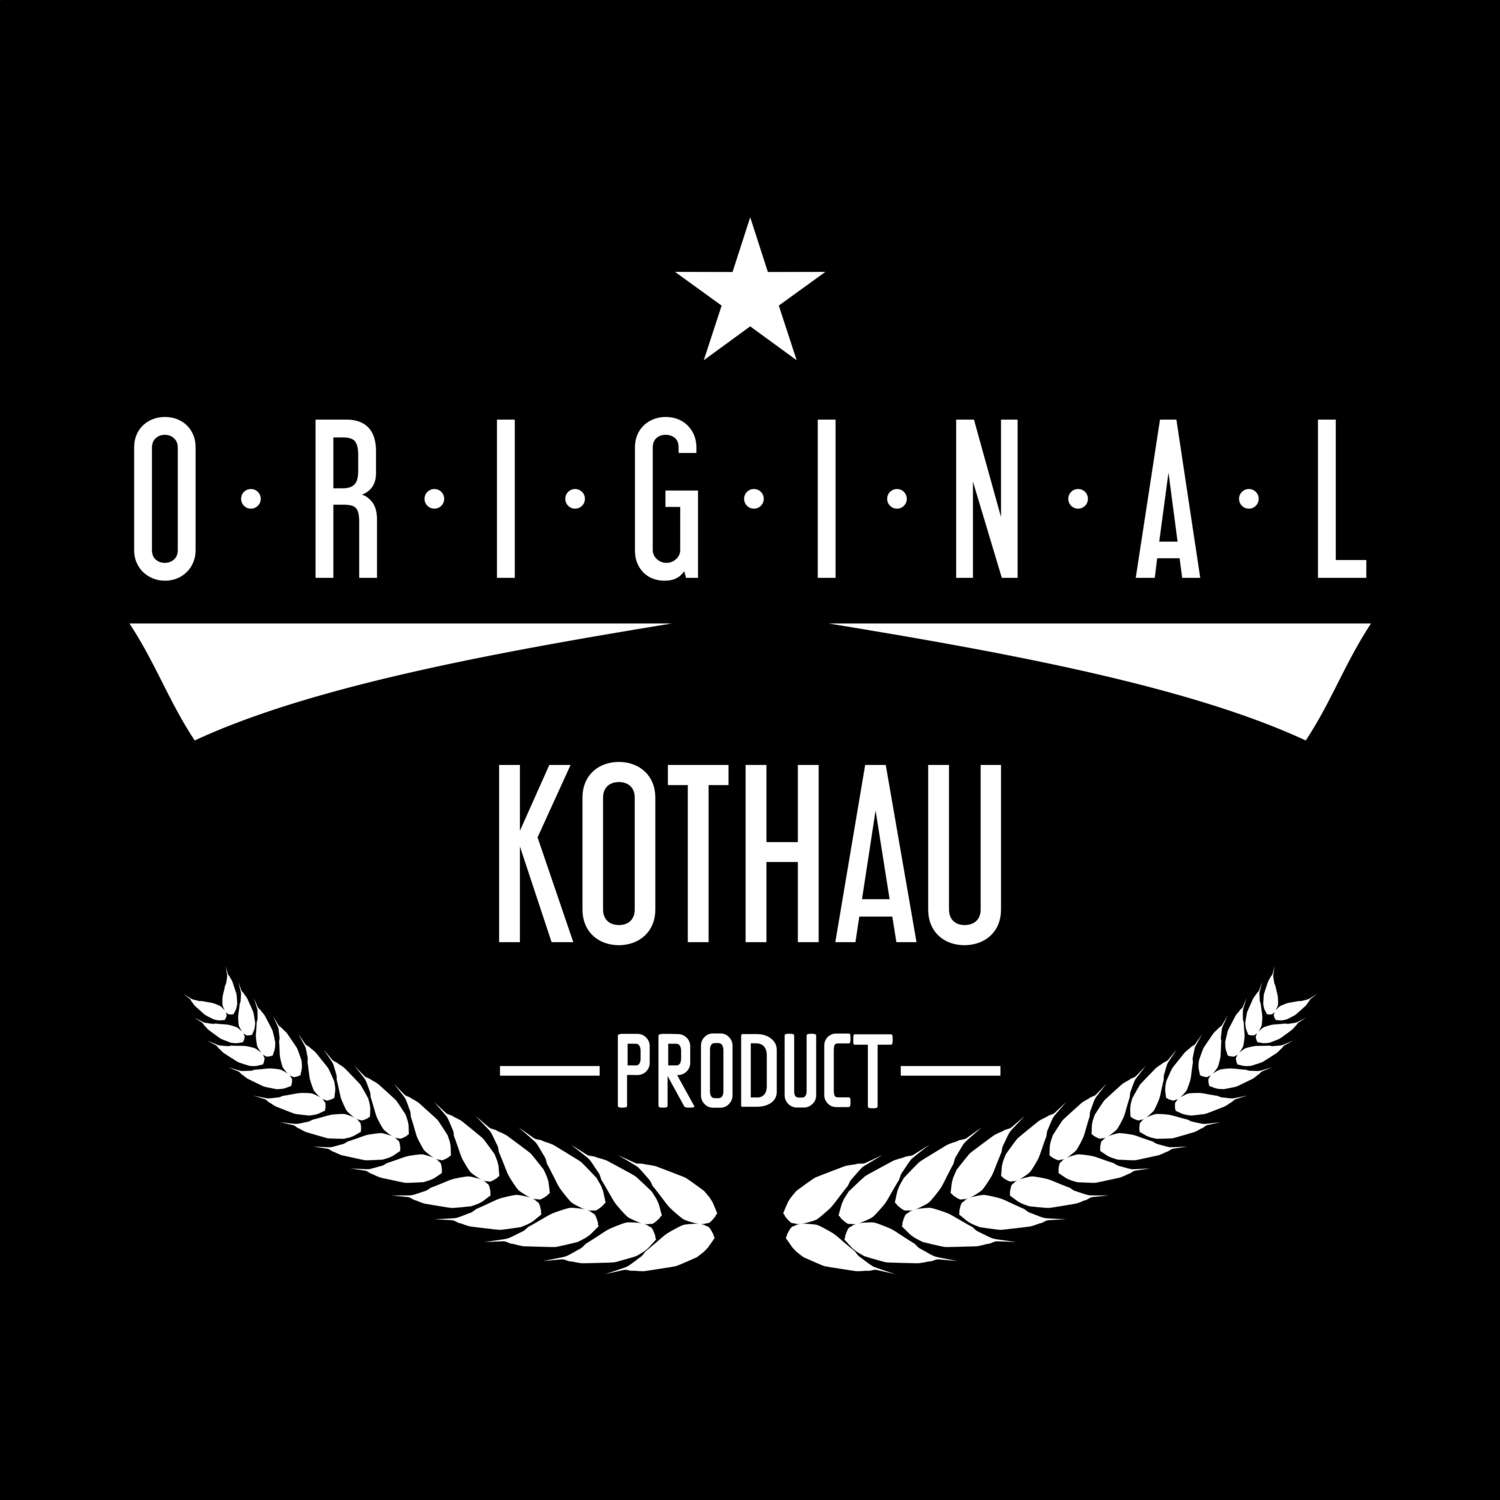 Kothau T-Shirt »Original Product«